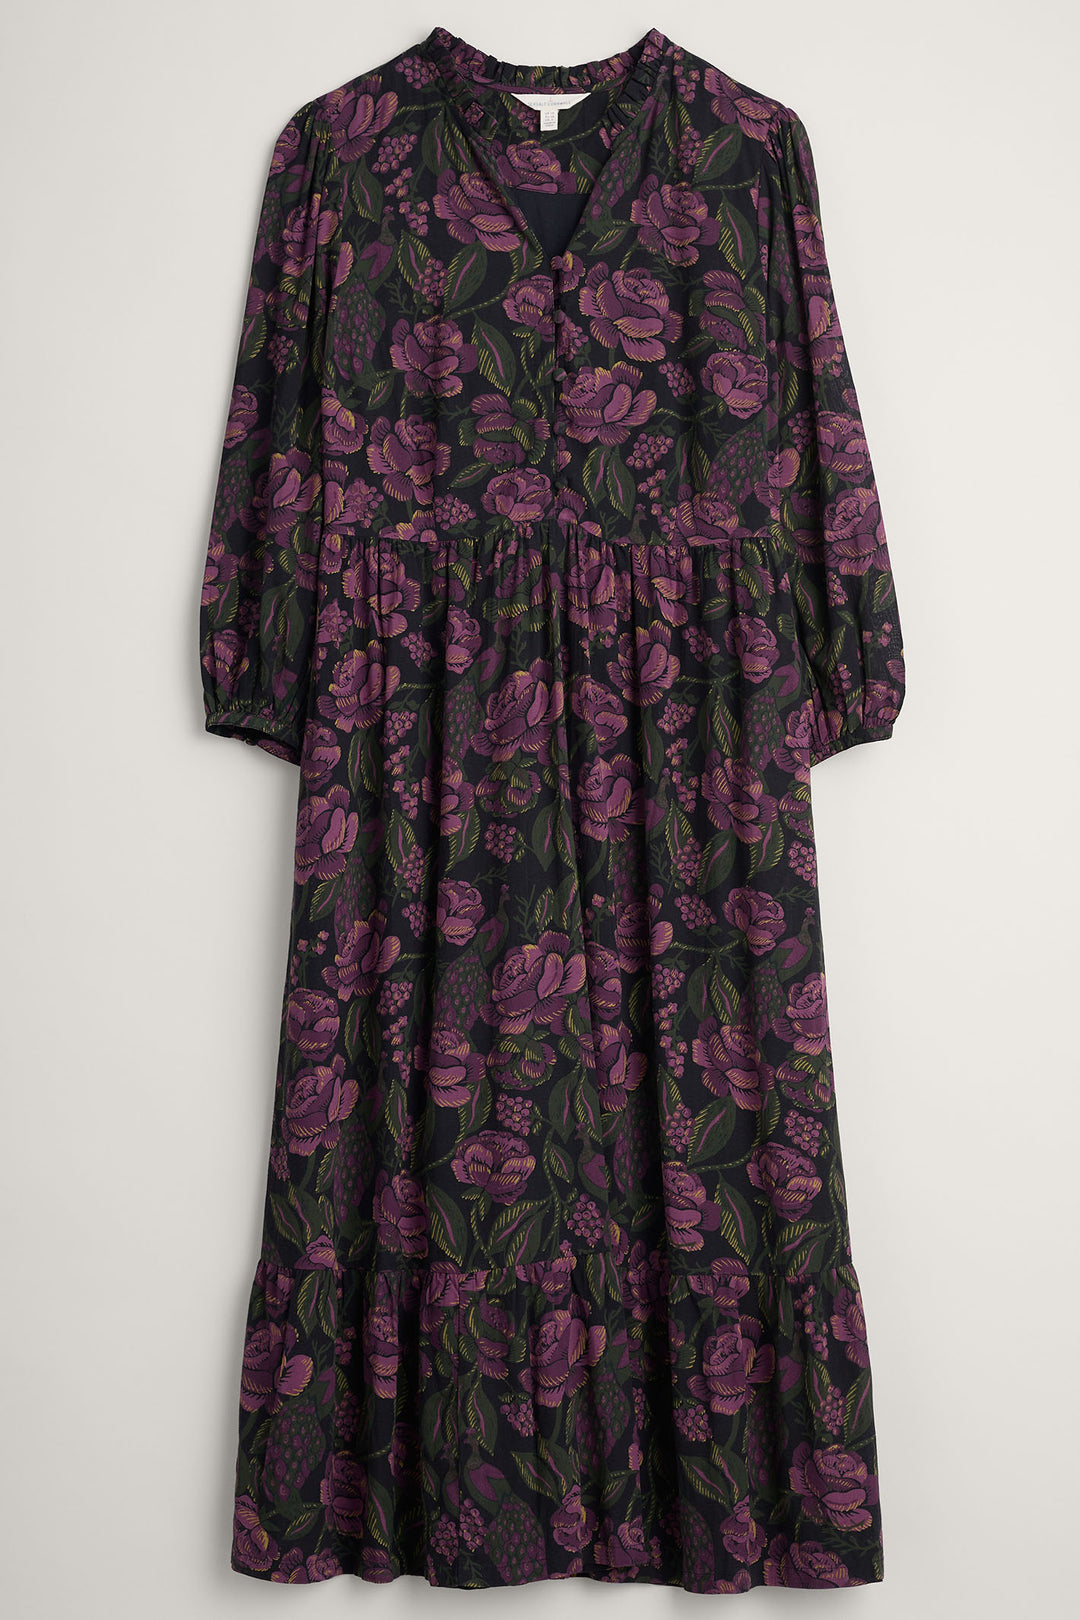 Seasalt Tapestry Bloom Grape Print Engleheart Dress - Shirley Allum Boutique